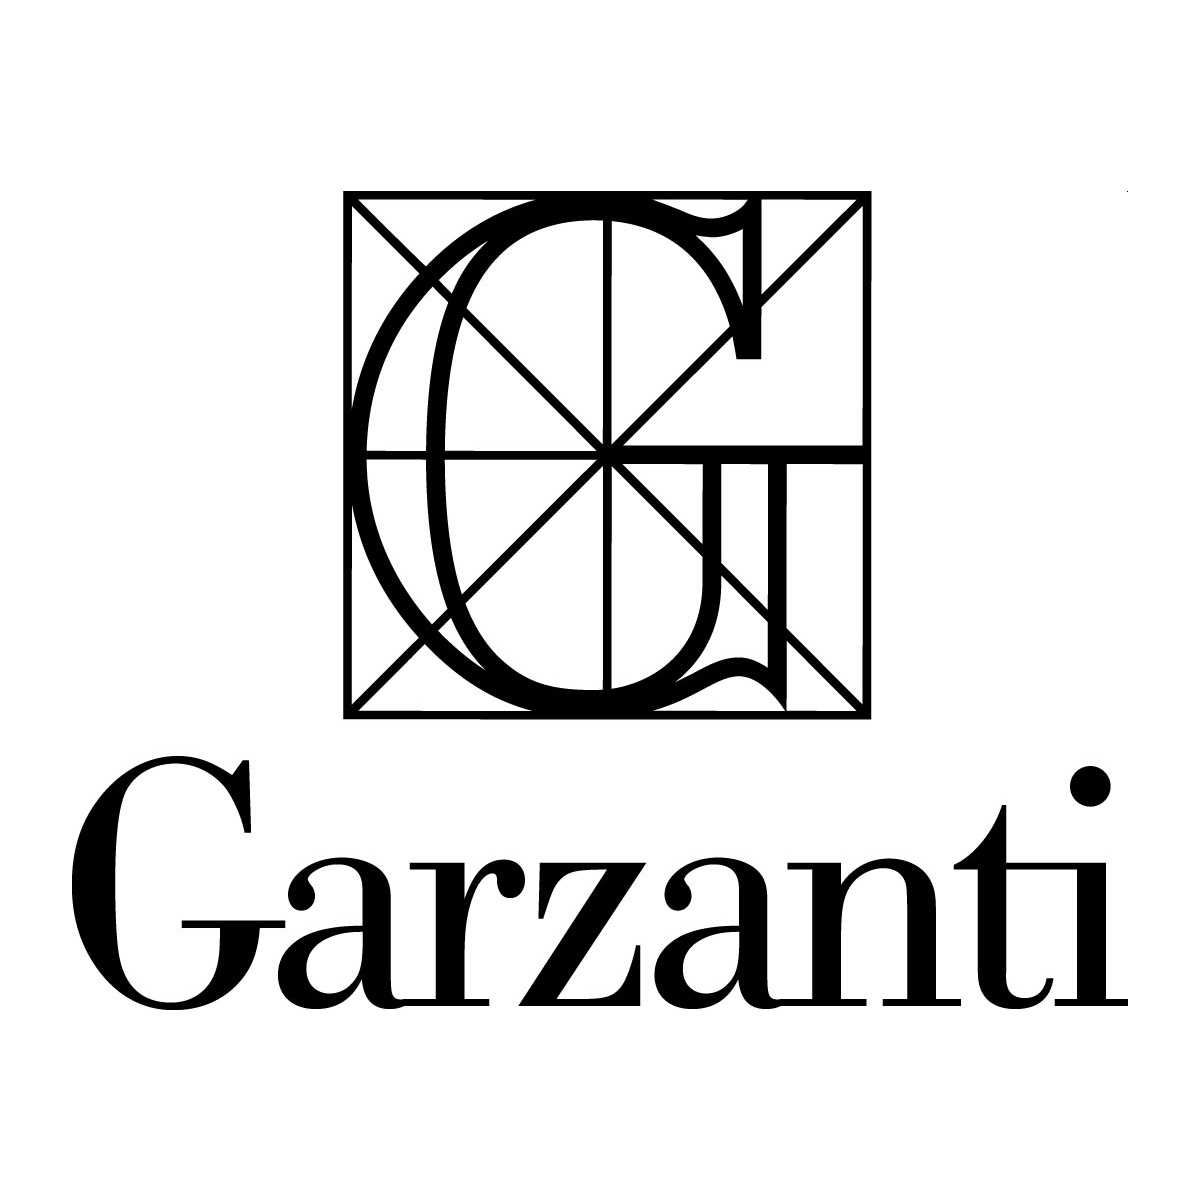 Garzanti